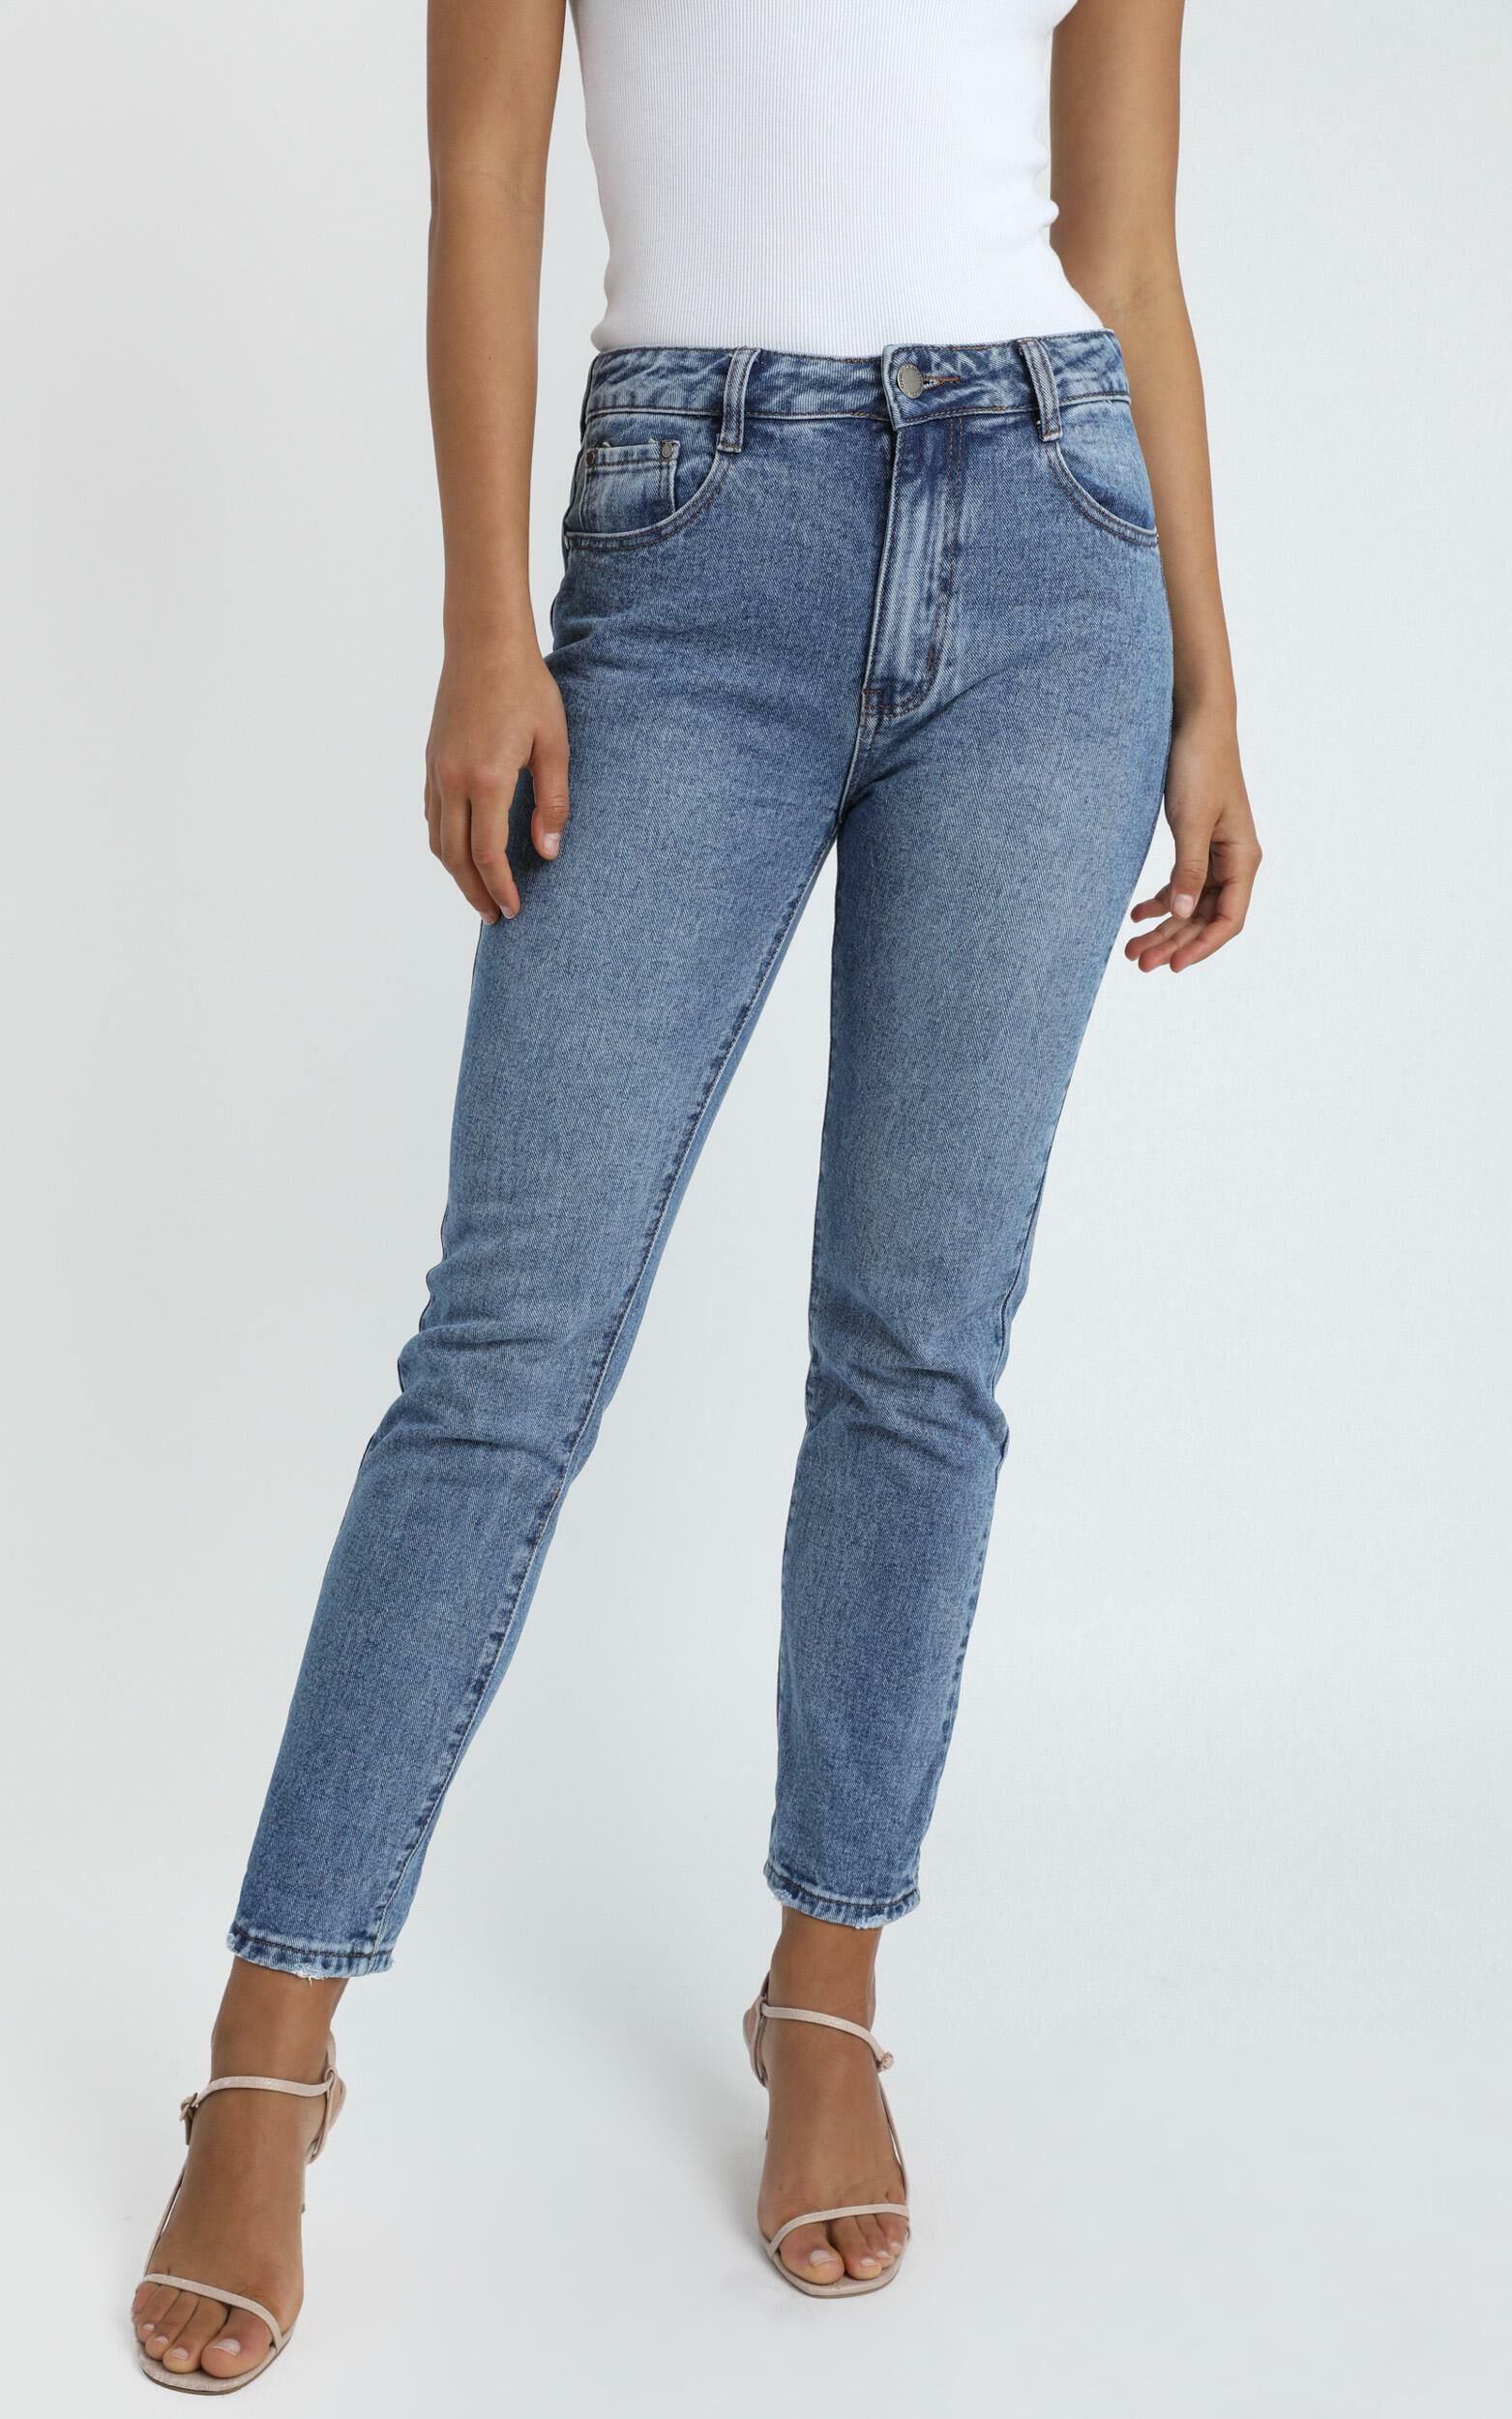 Remy Jeans in mid wash denim - 14 (XL), Blue